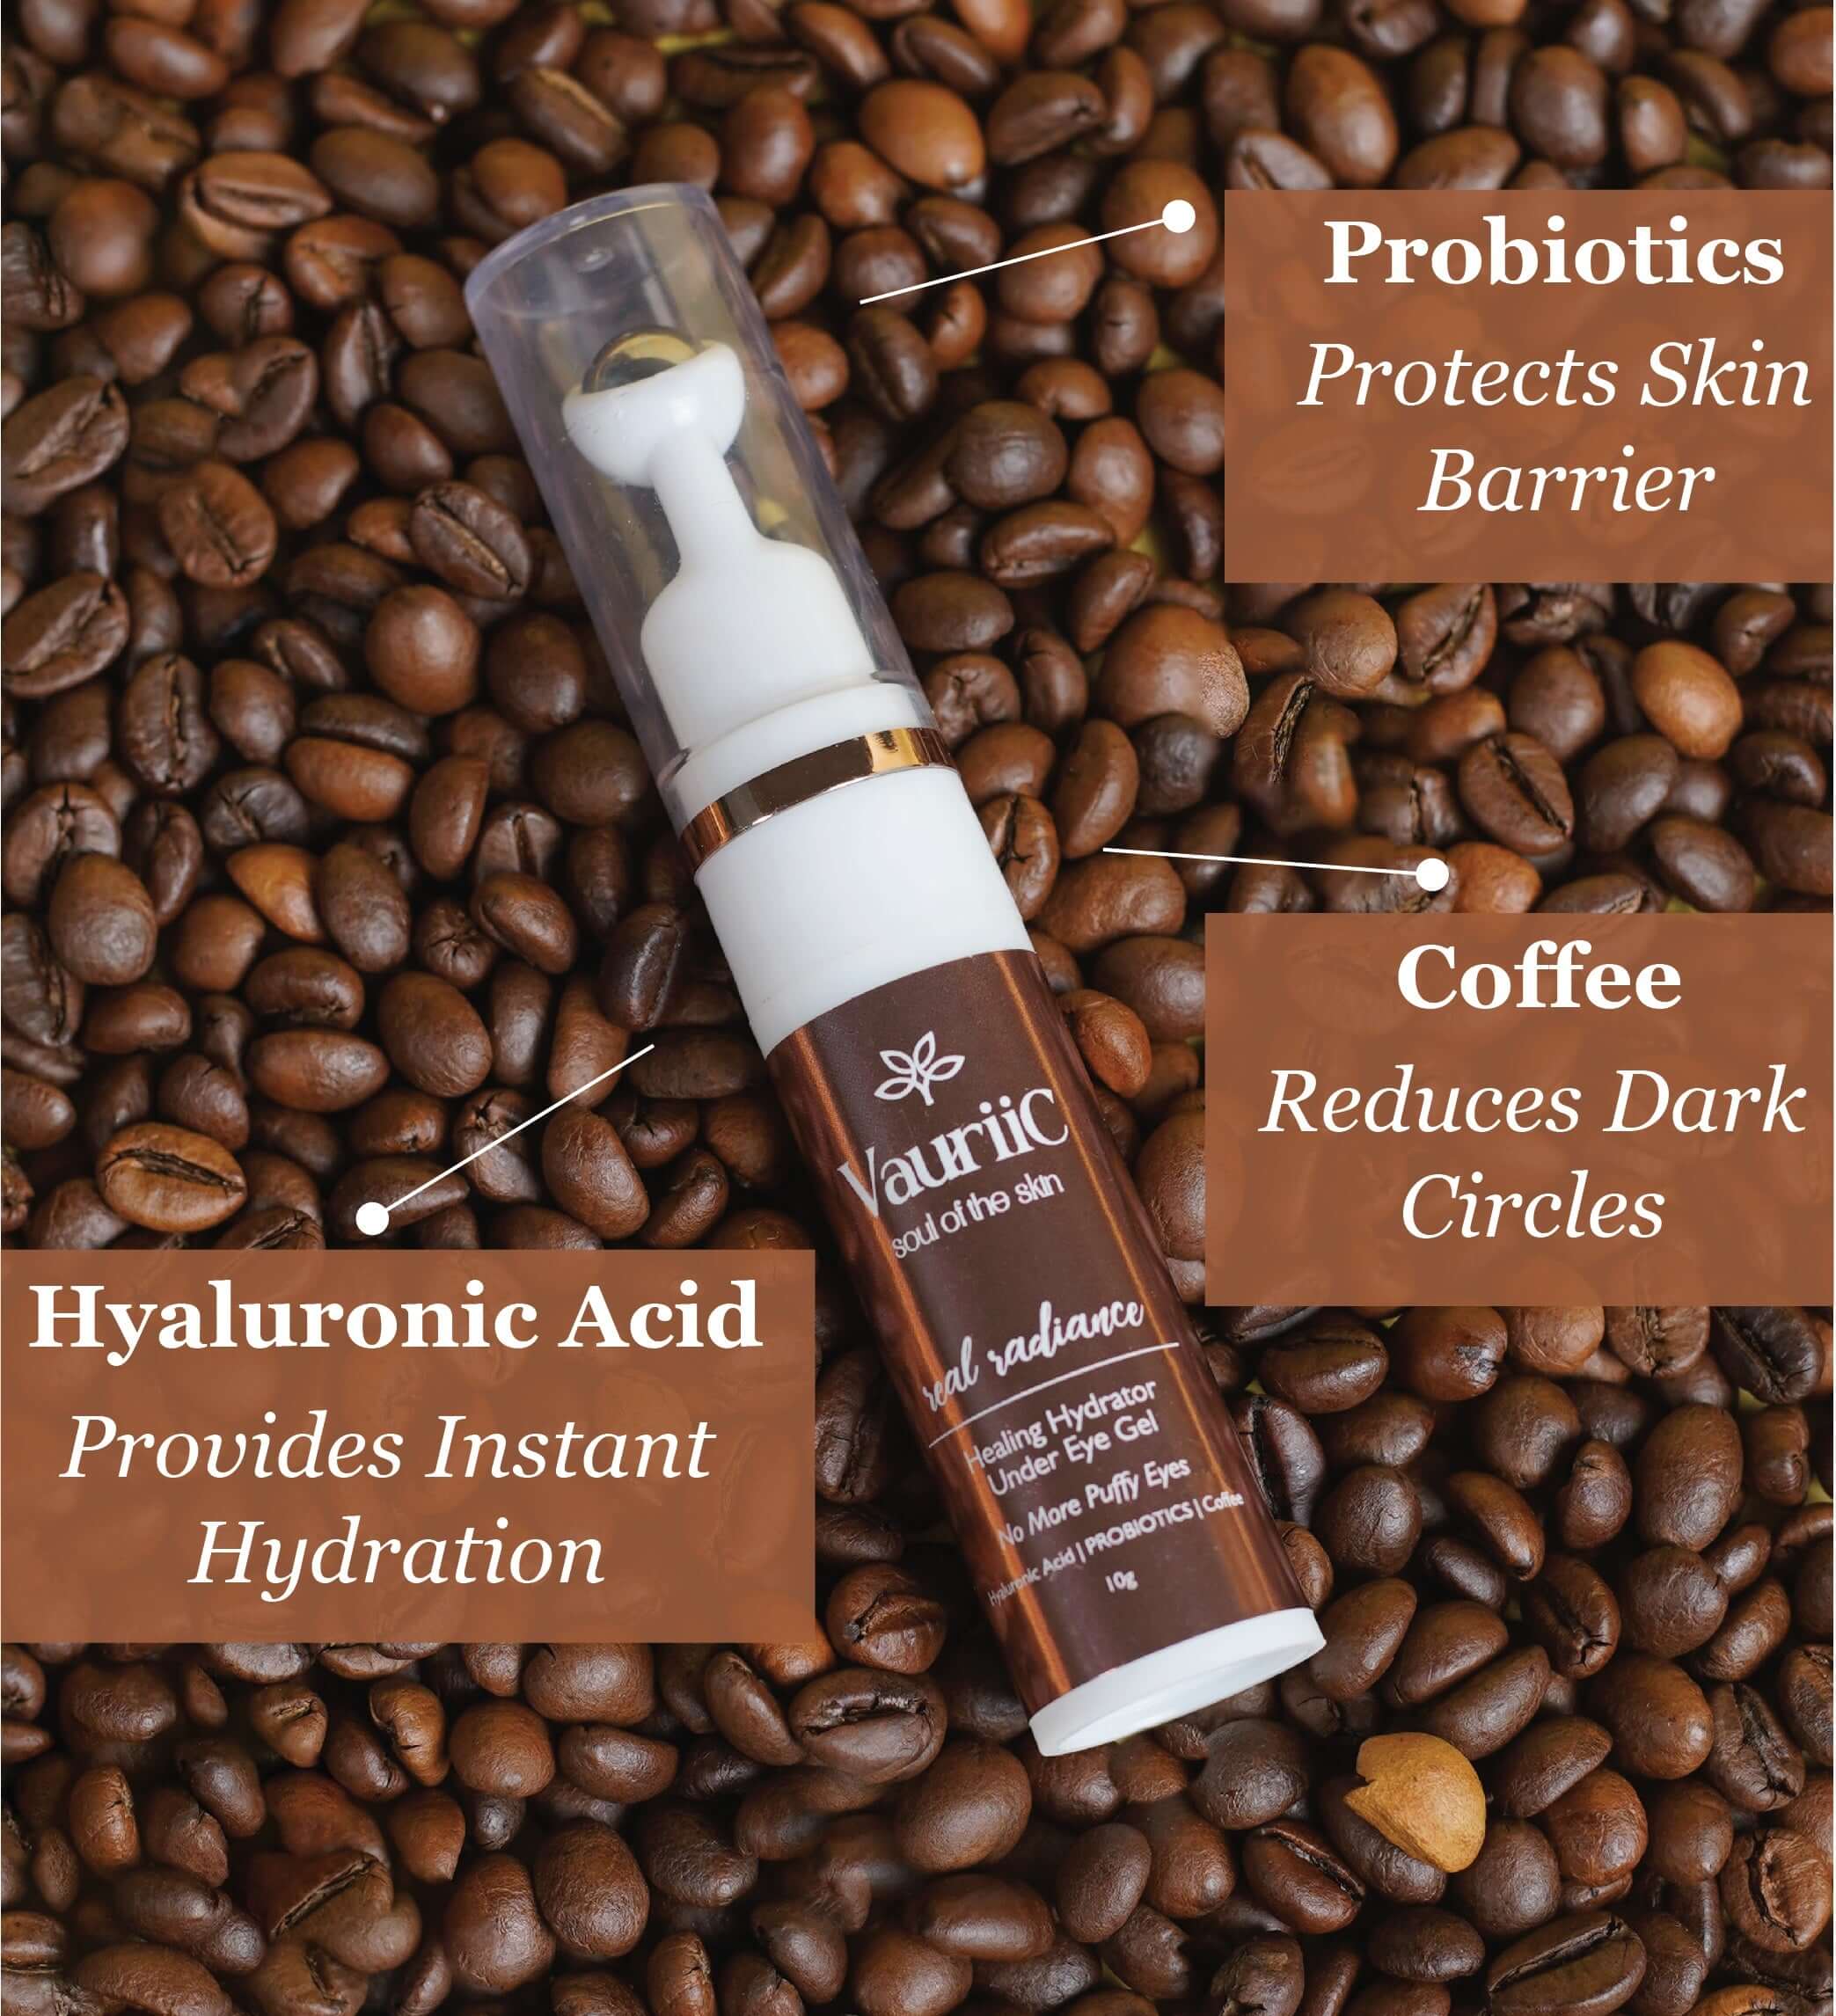 Coffee Under Eye Gel for Dark Circles & Puffiness | Natural & 100% Vegan | VauriiC